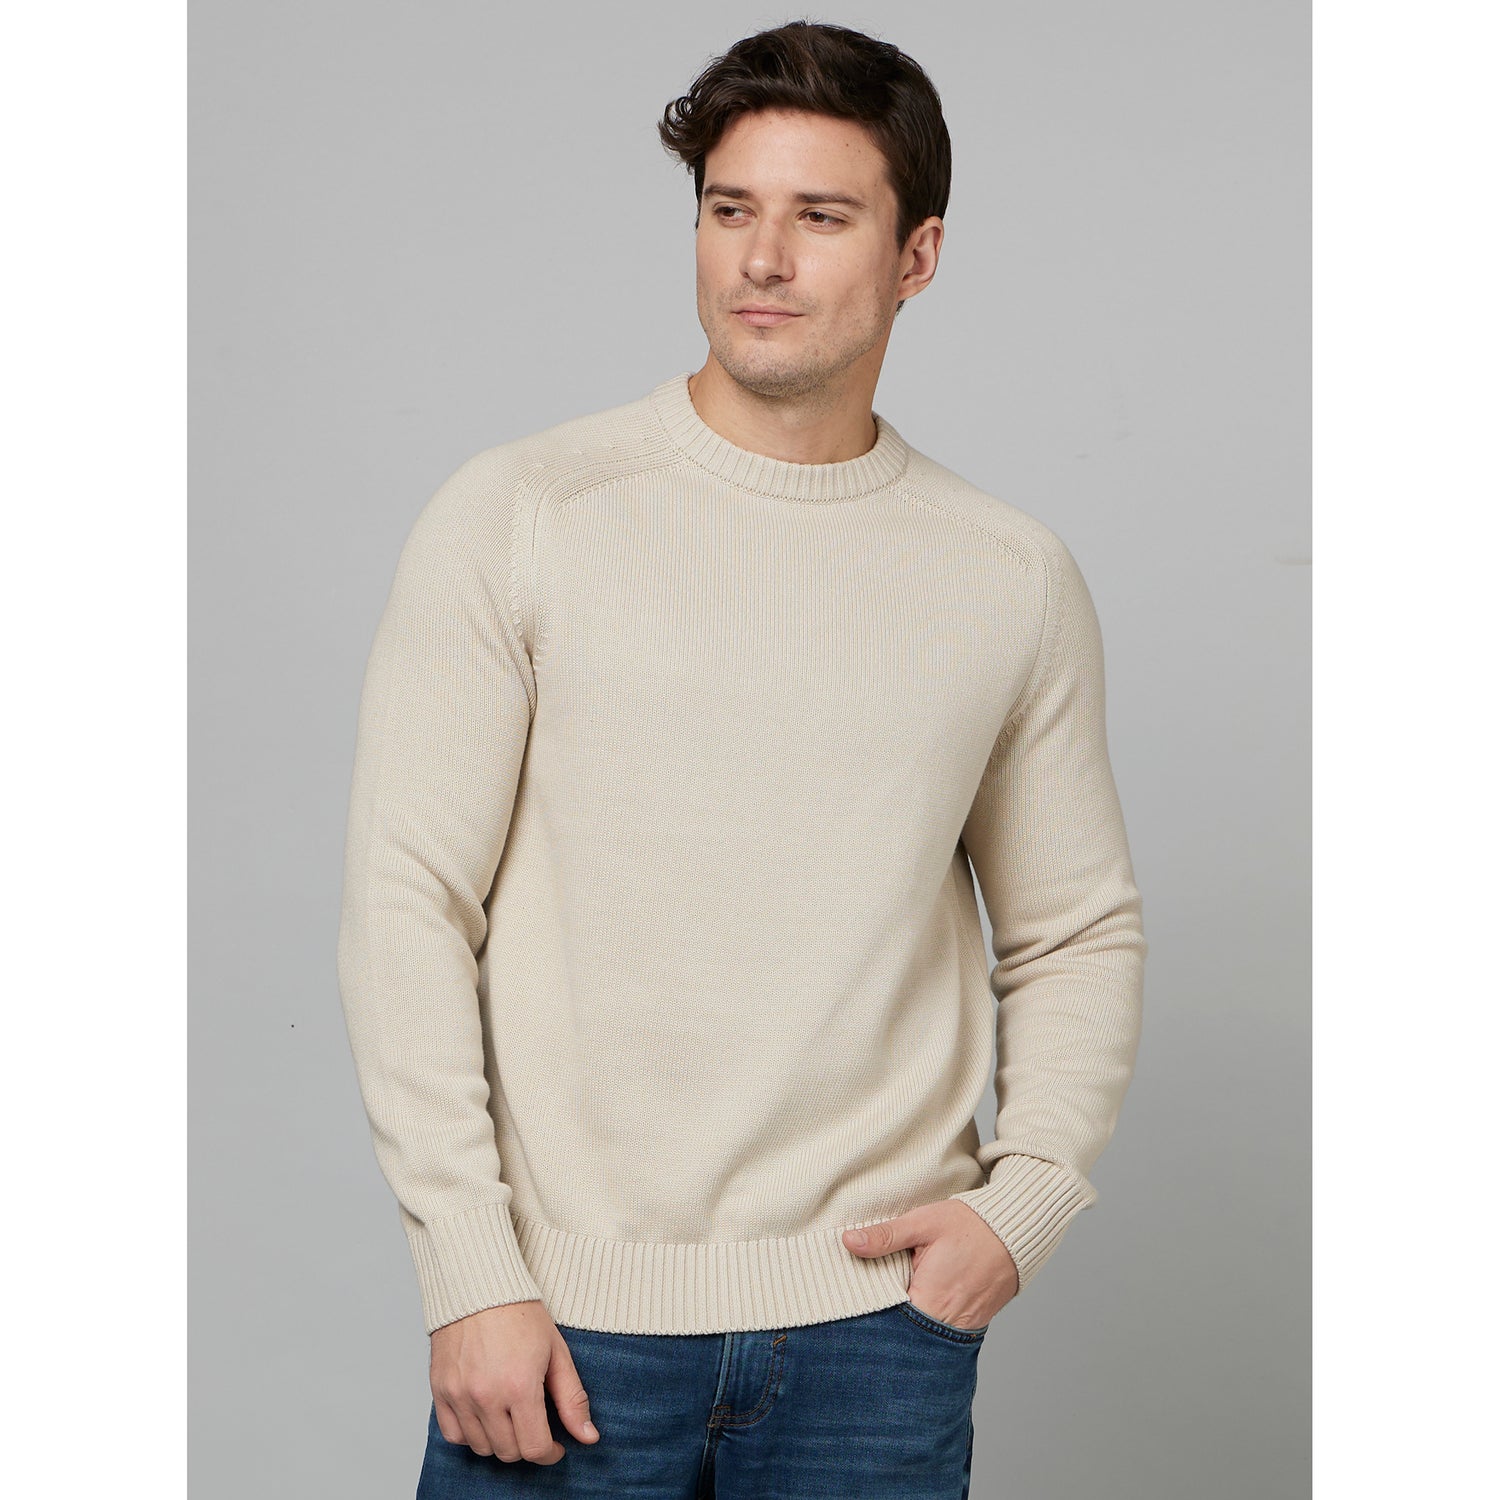 Light Beige Round Neck Long Sleeve Cotton Pullover Sweater (FEBASICIN)